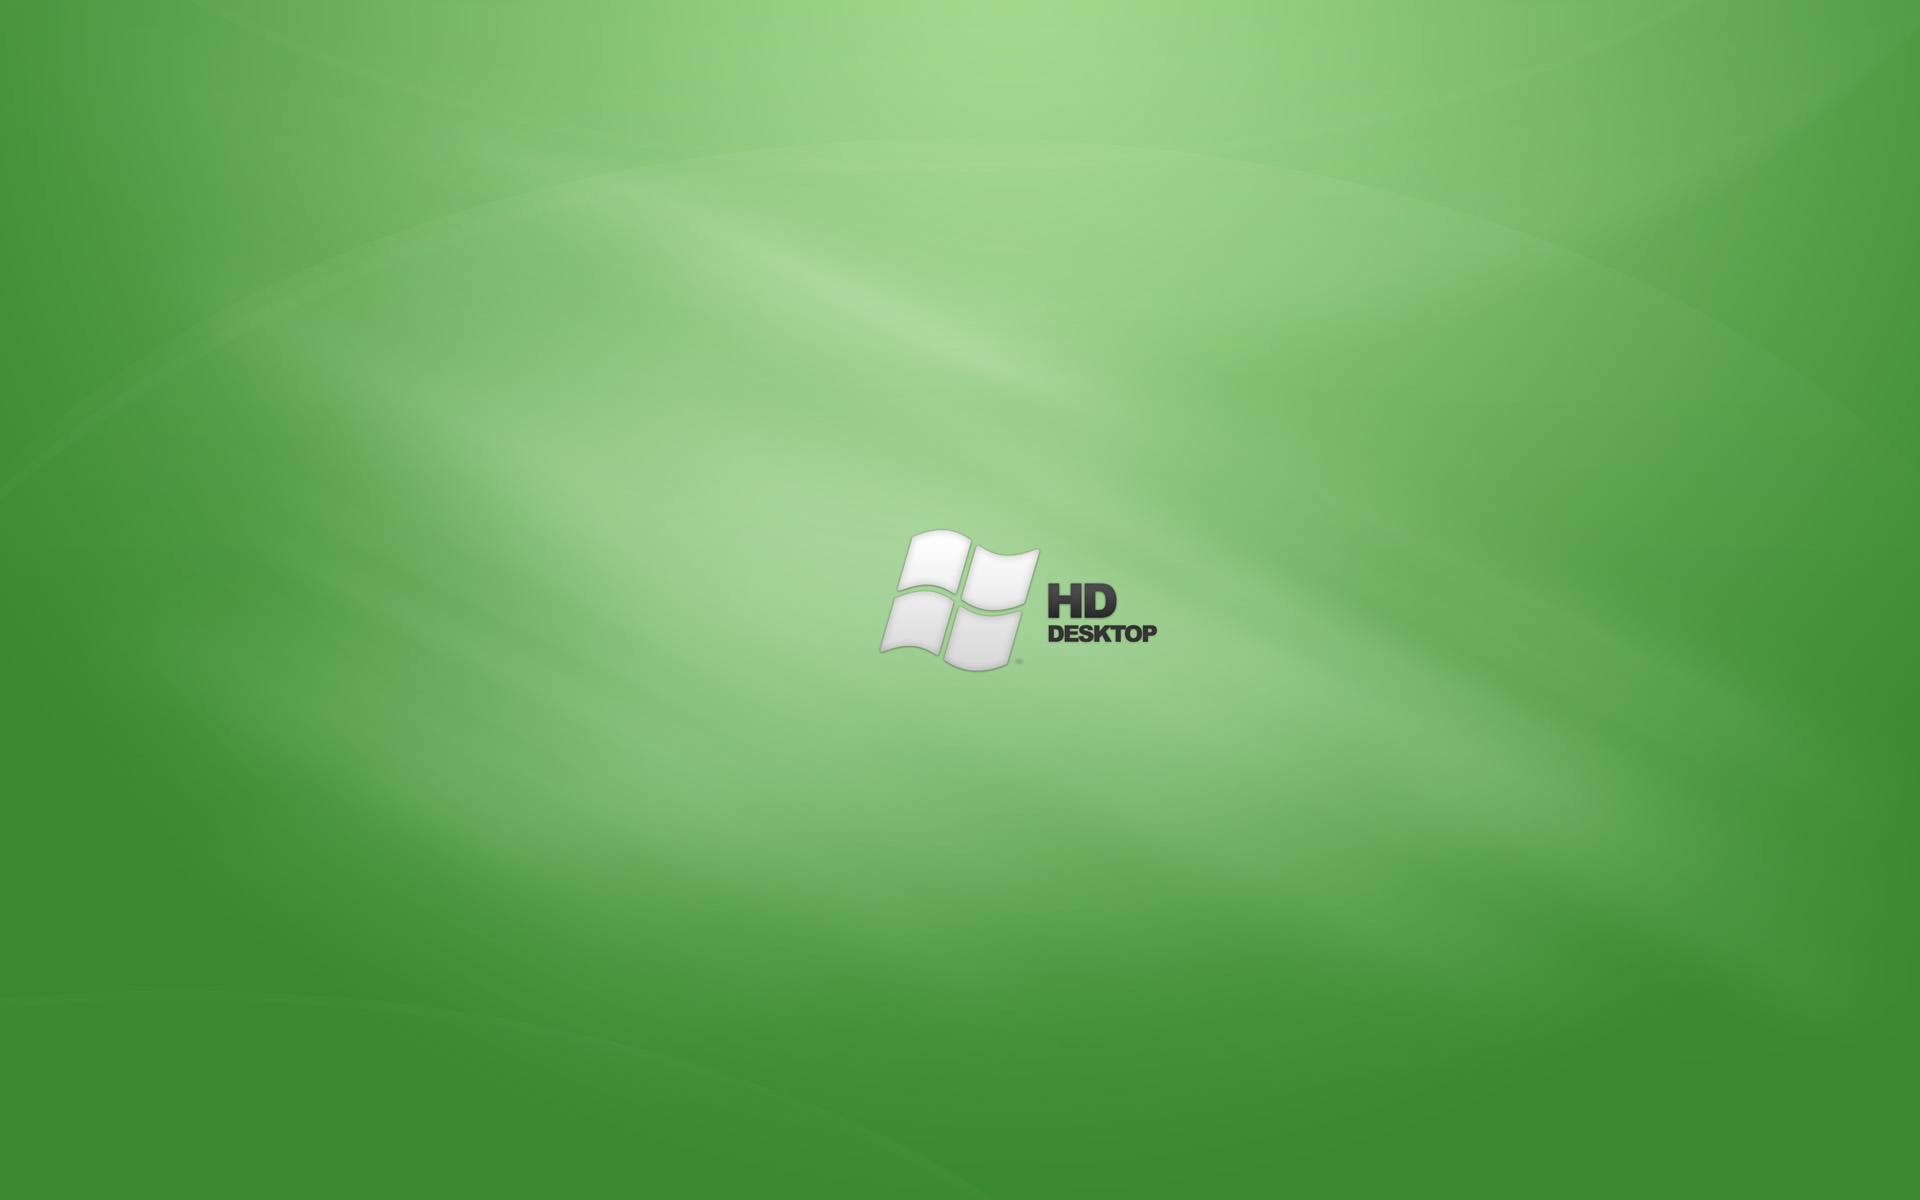 Green HD Desktop Wallpaper Stock Photos